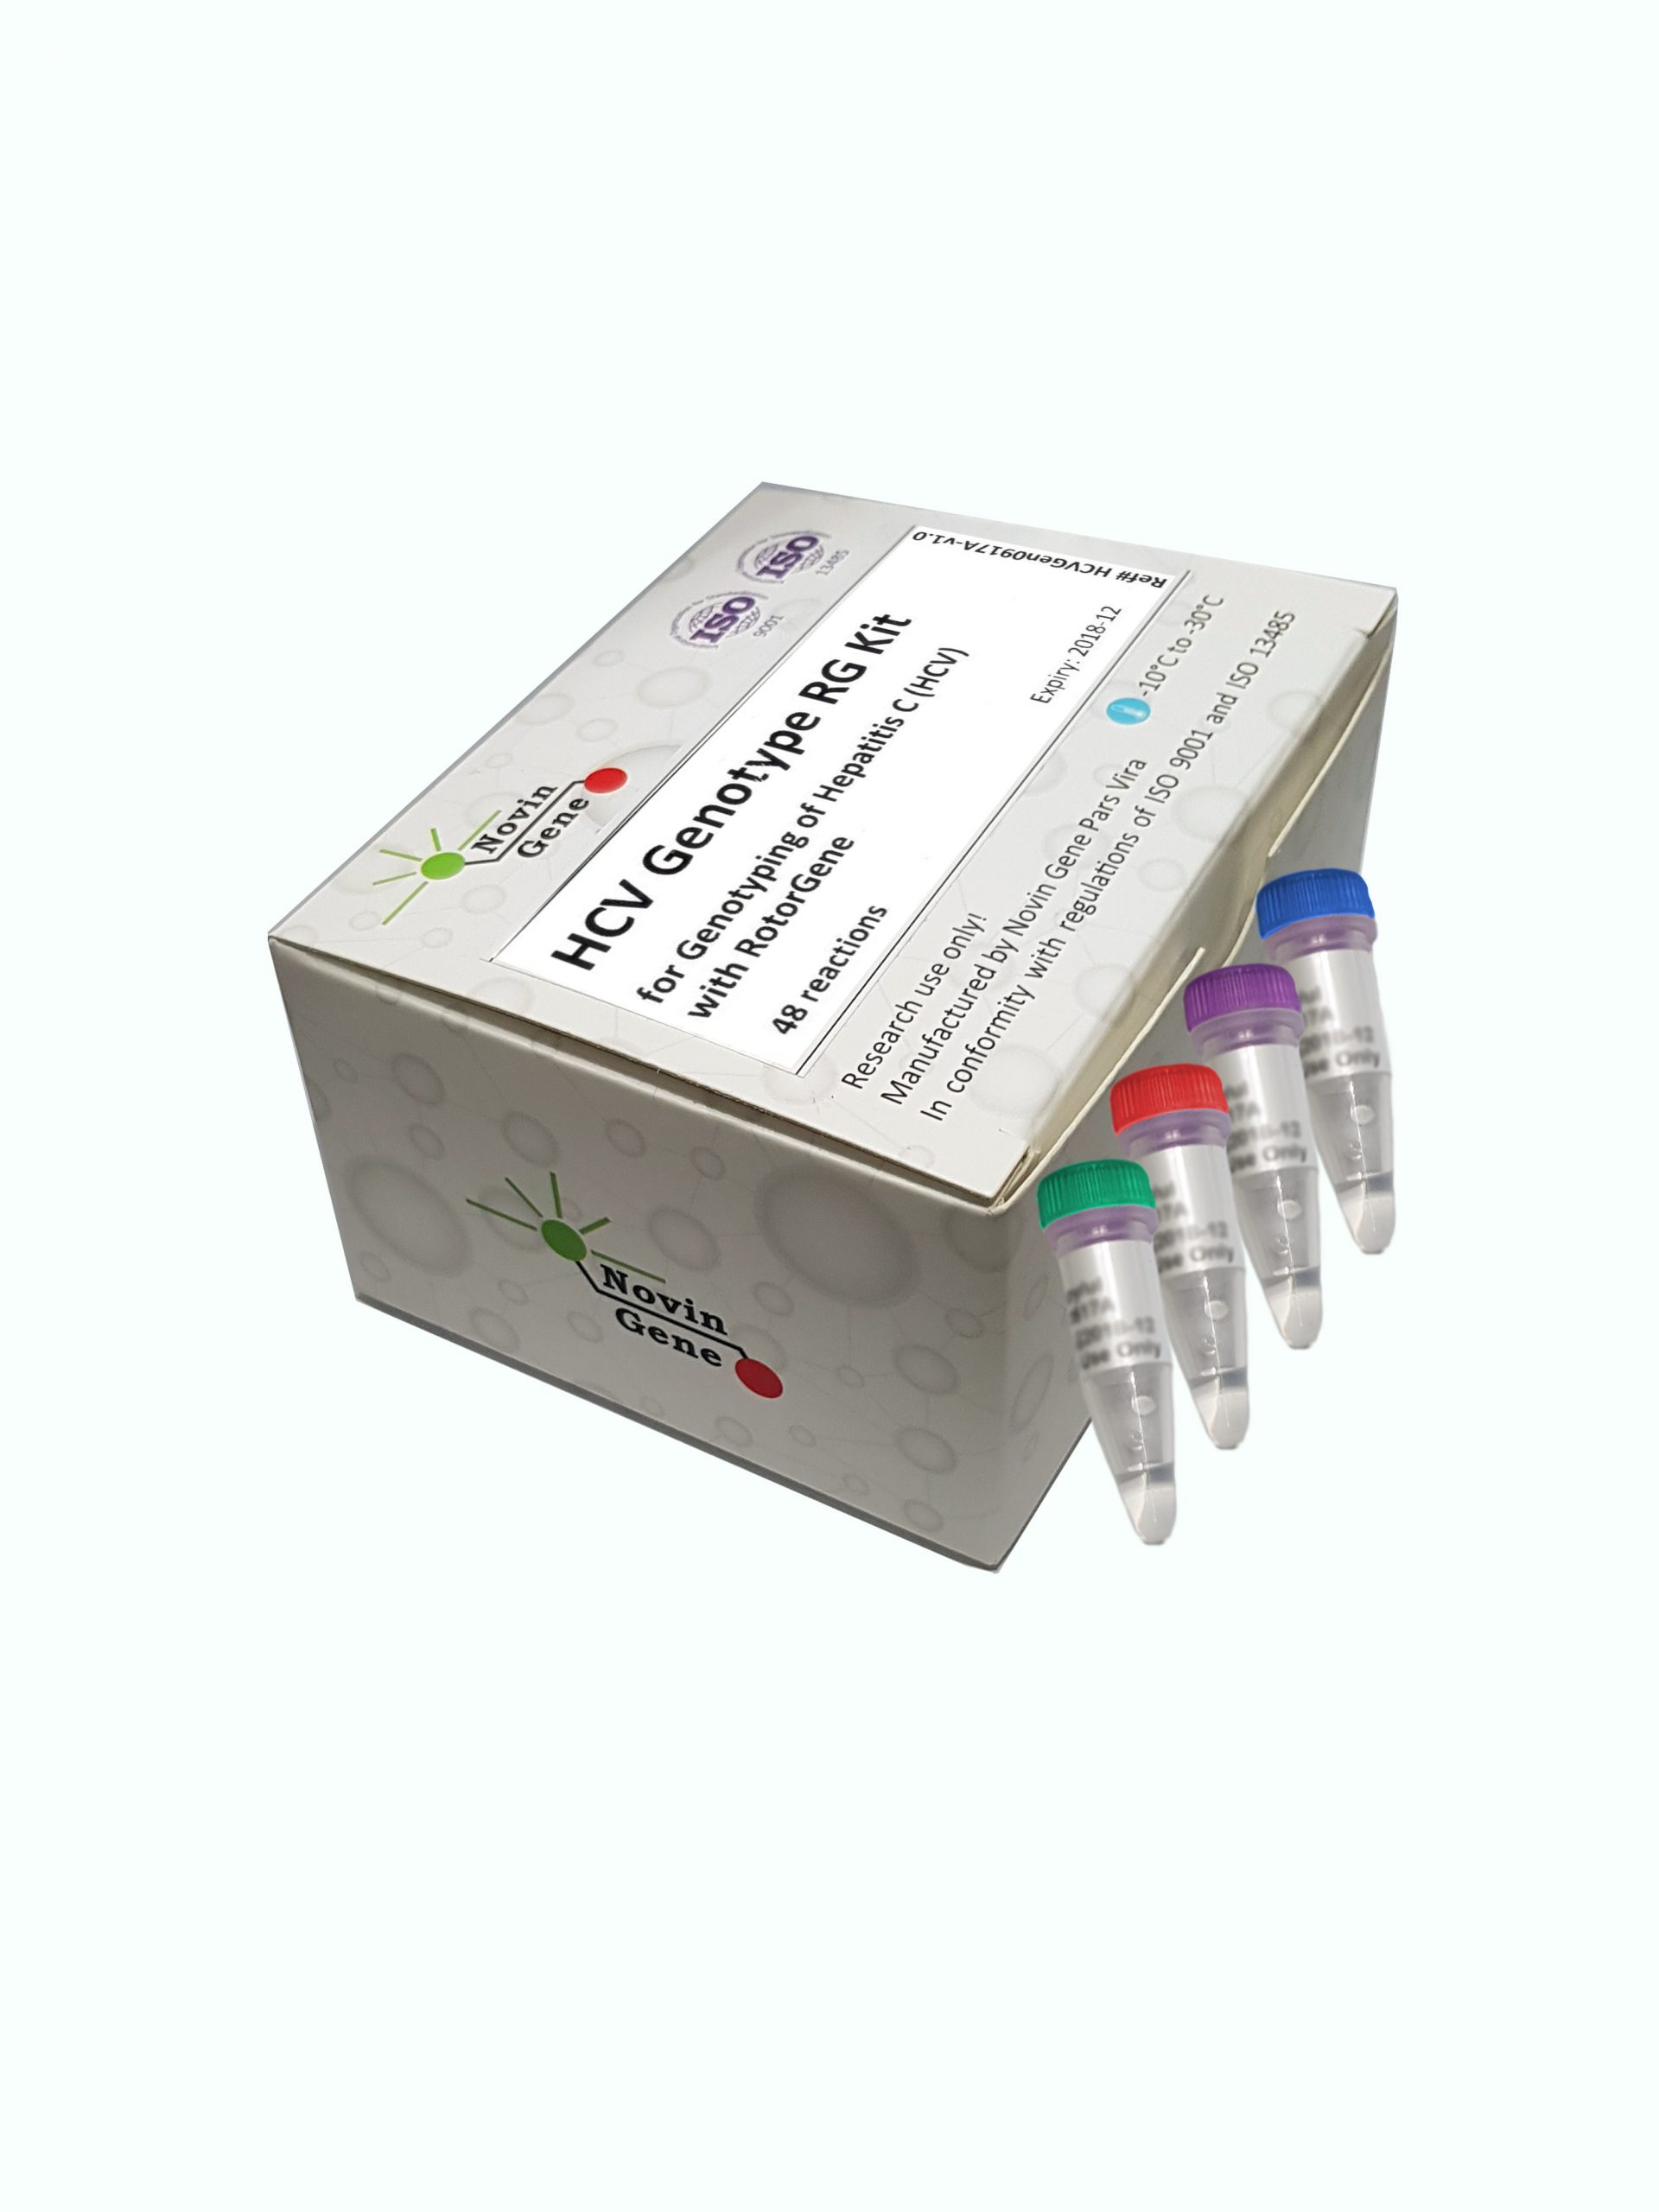 HCV Genotype (RG) 24rxn (تعیین ژنوتایپ ویروس هپاتیت C را به روش Real-Time RT-PCR)